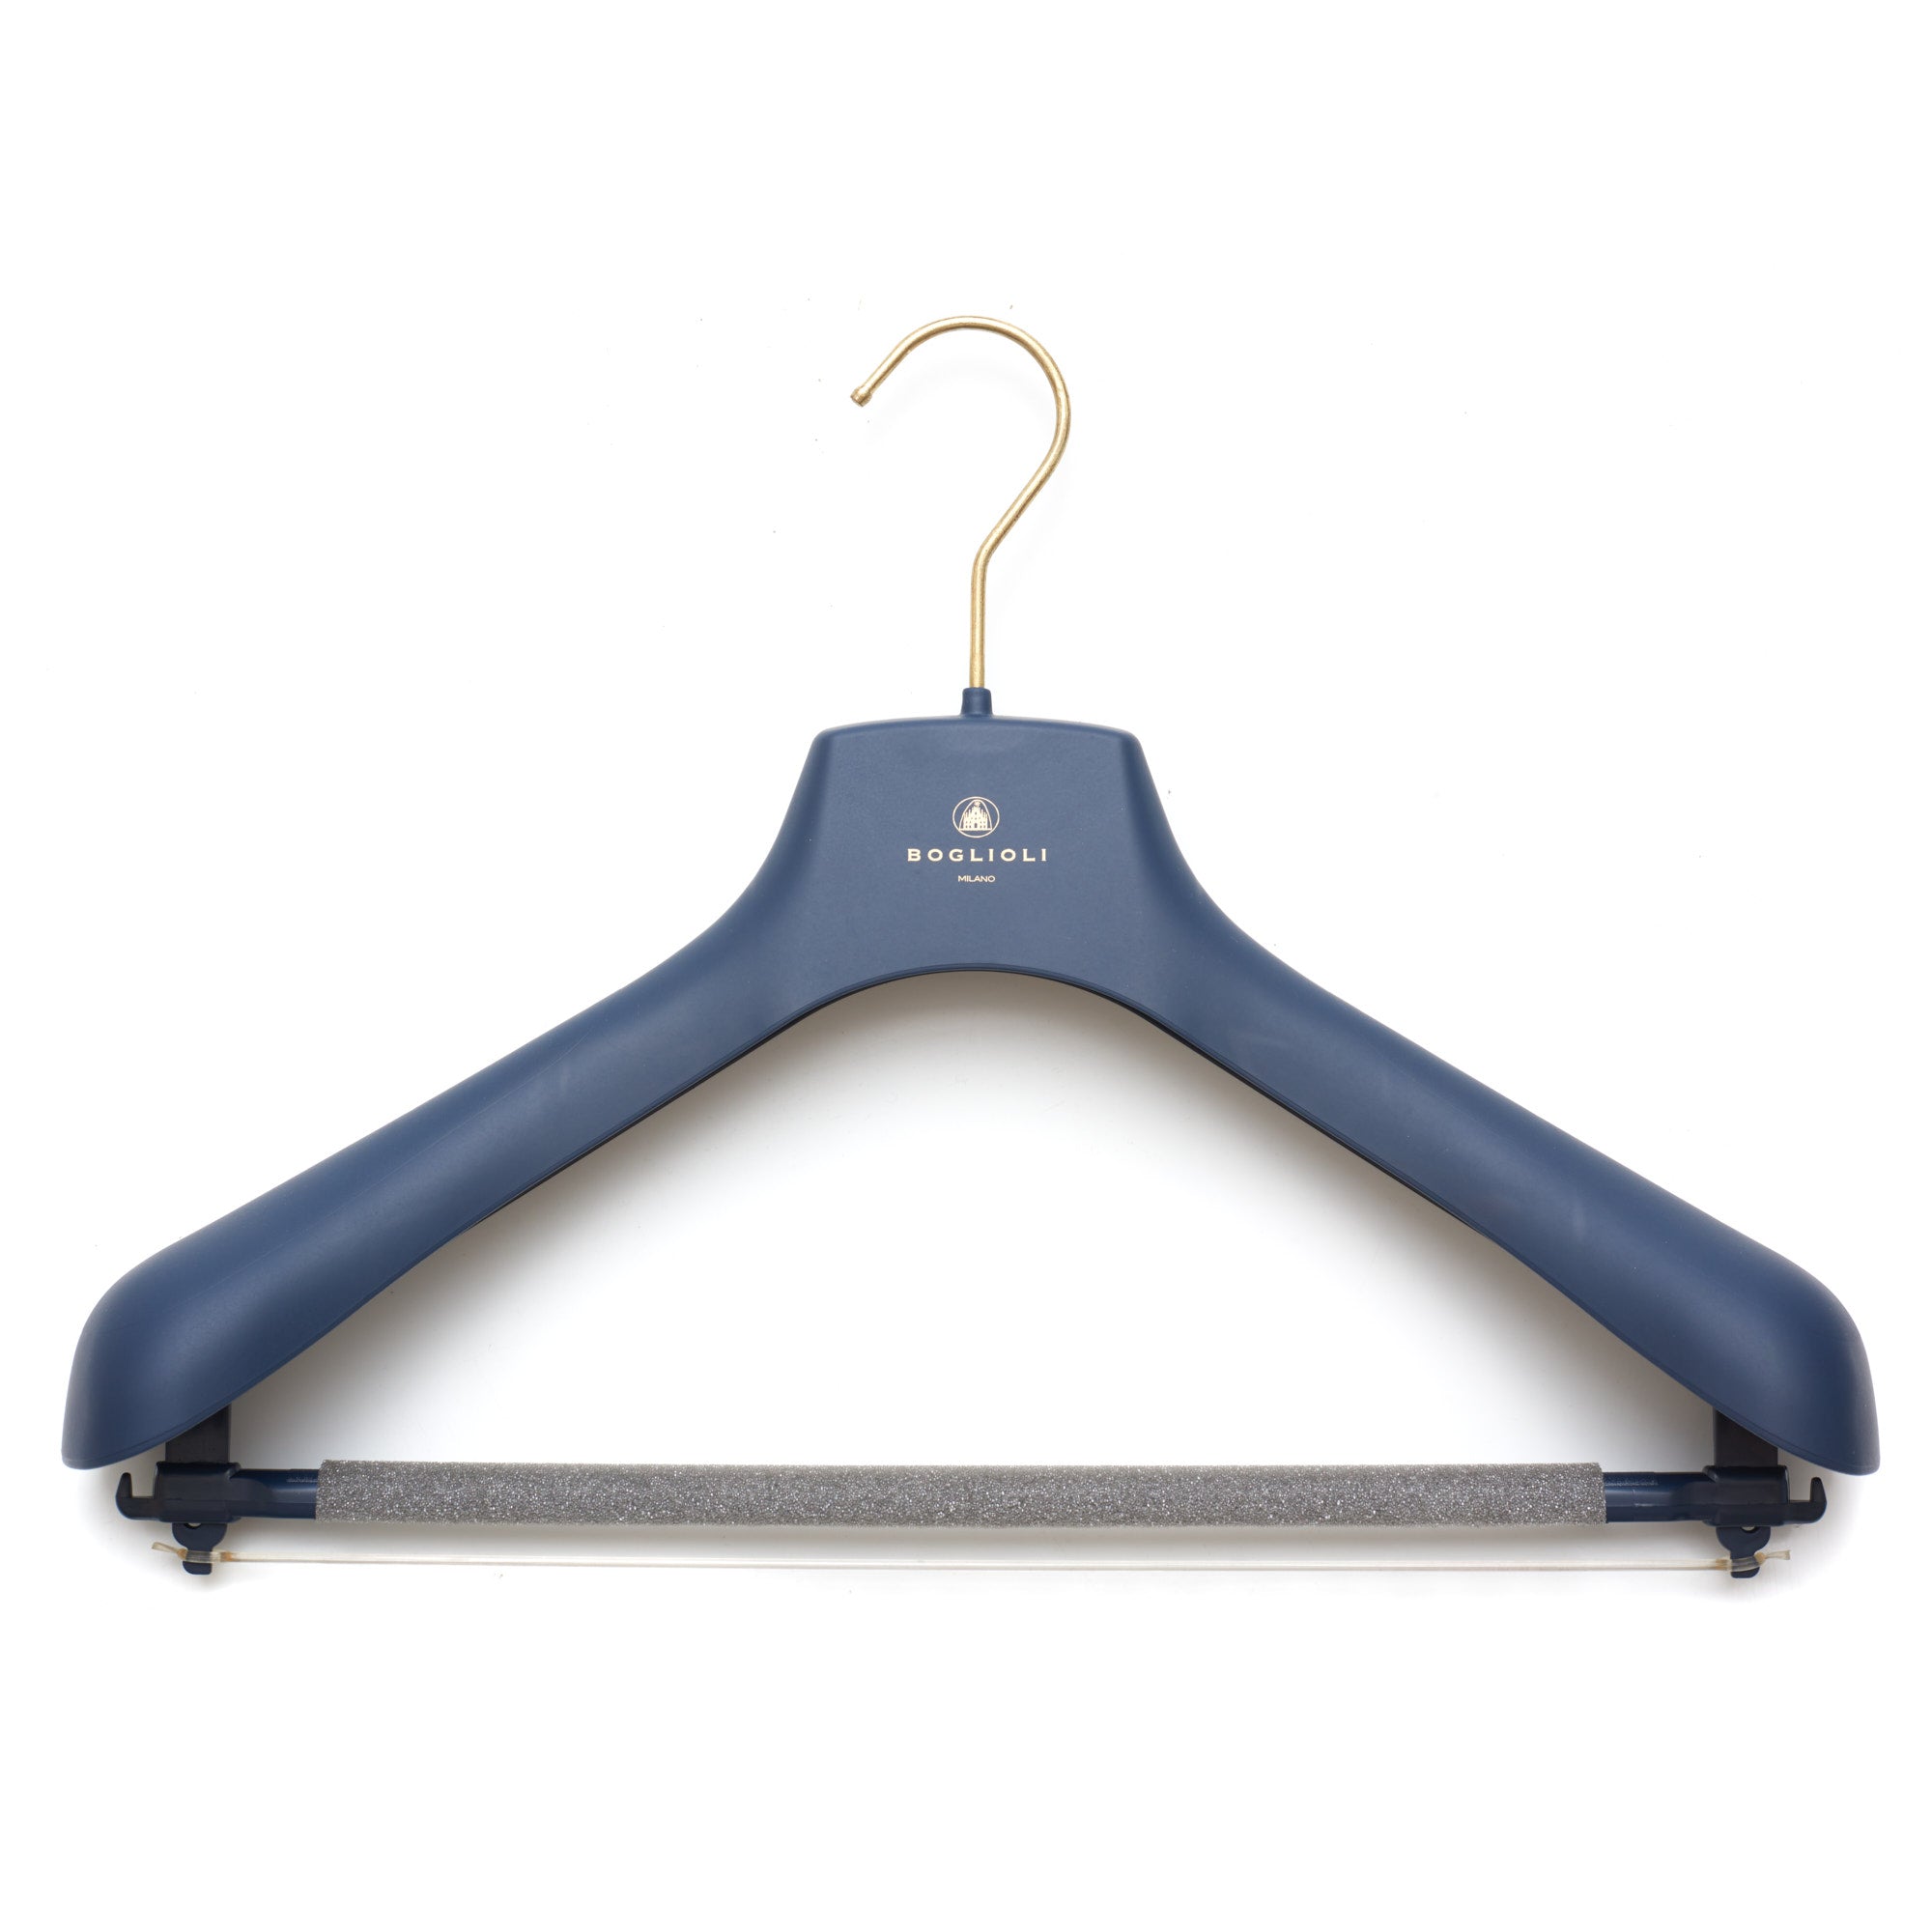 BOGLIOLI Milano Navy Blue Plastic Suit Hanger Set of 5 BOGLIOLI